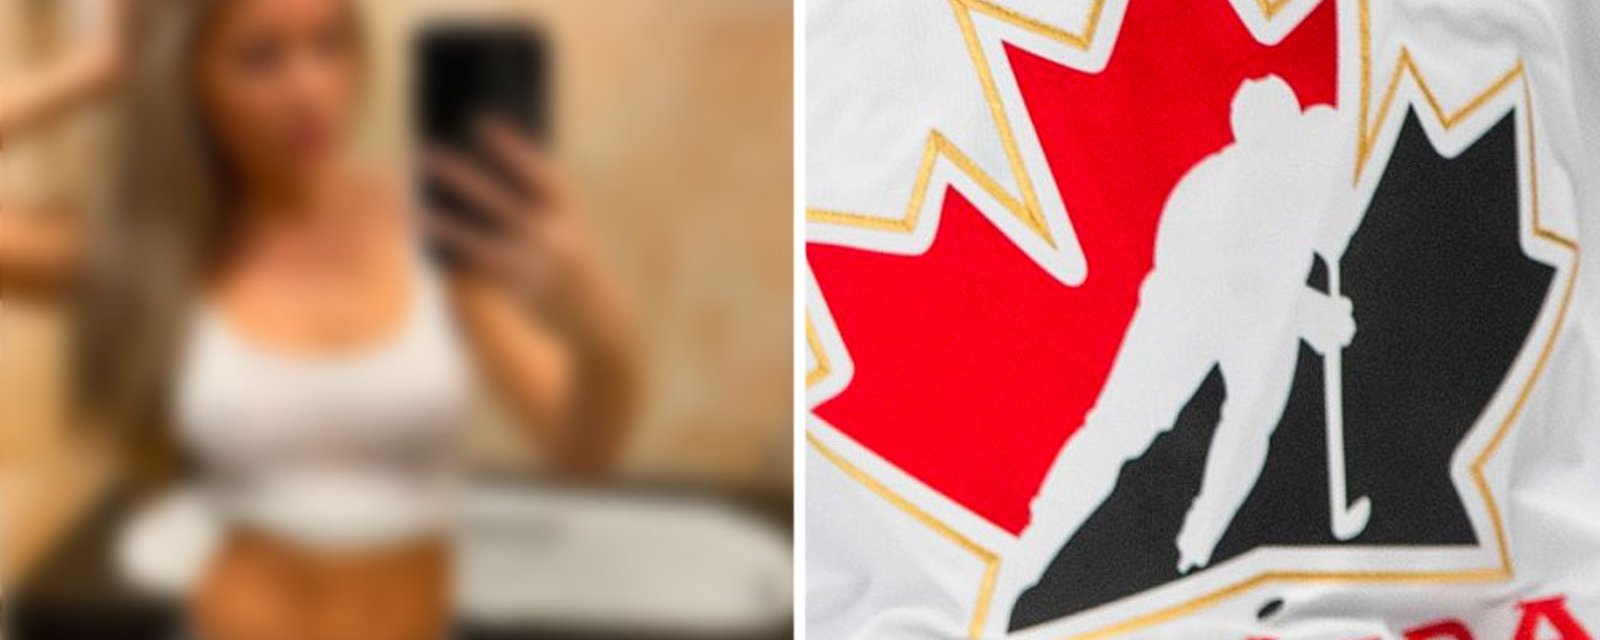 Alleged victim in Hockey Canada scandal breaks her silence